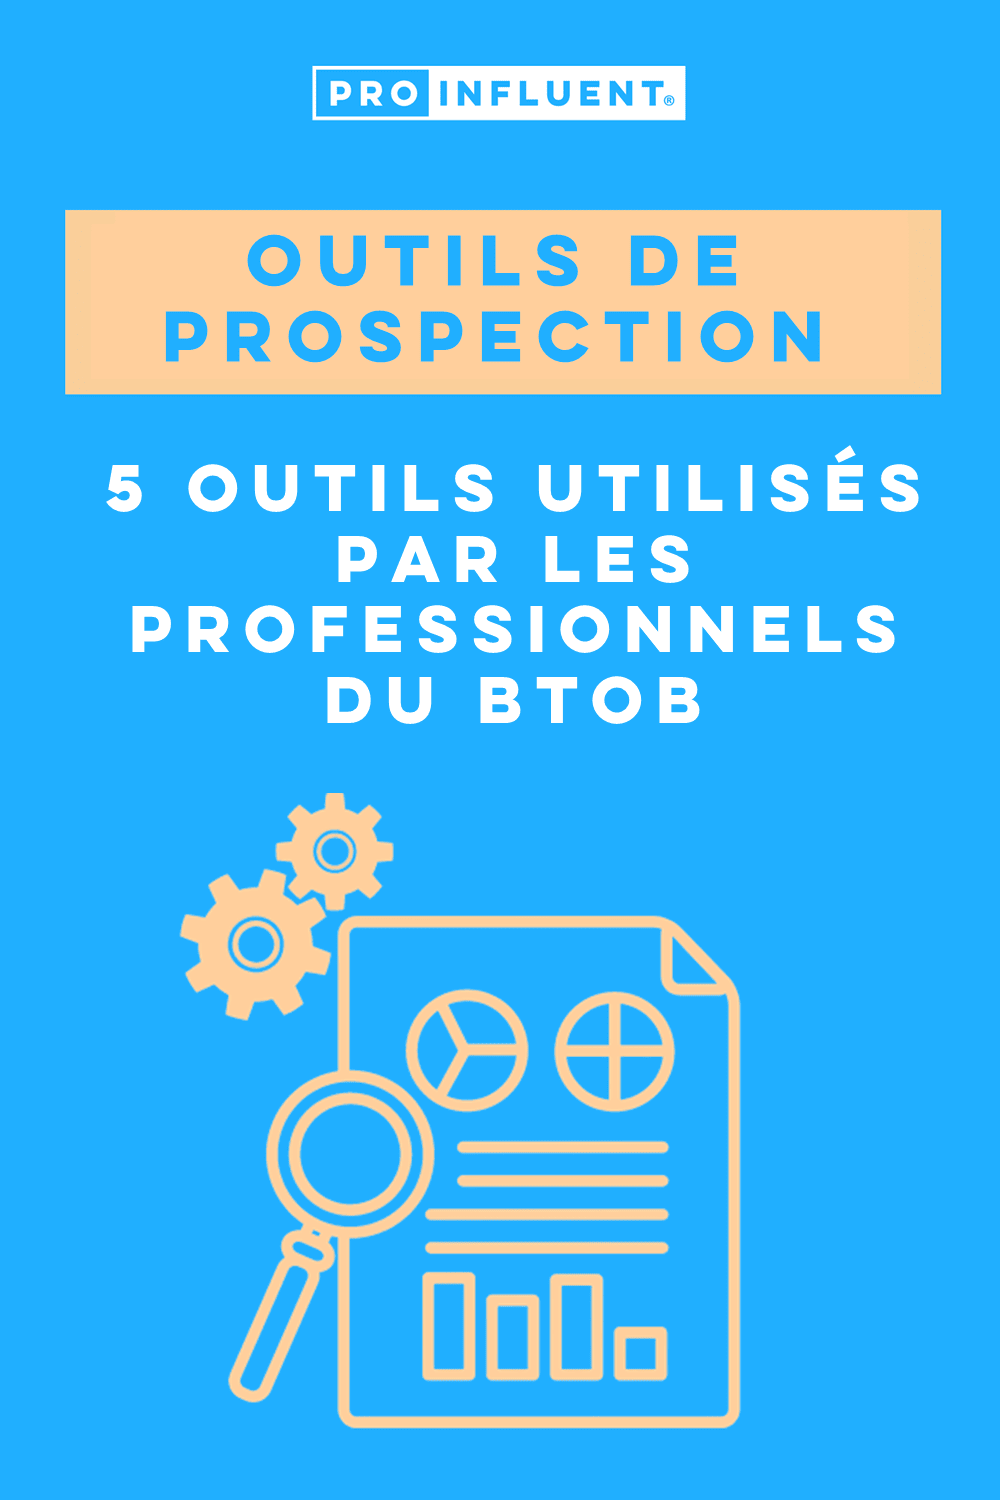 Prospecting tools: 5 tools used by btob professionals